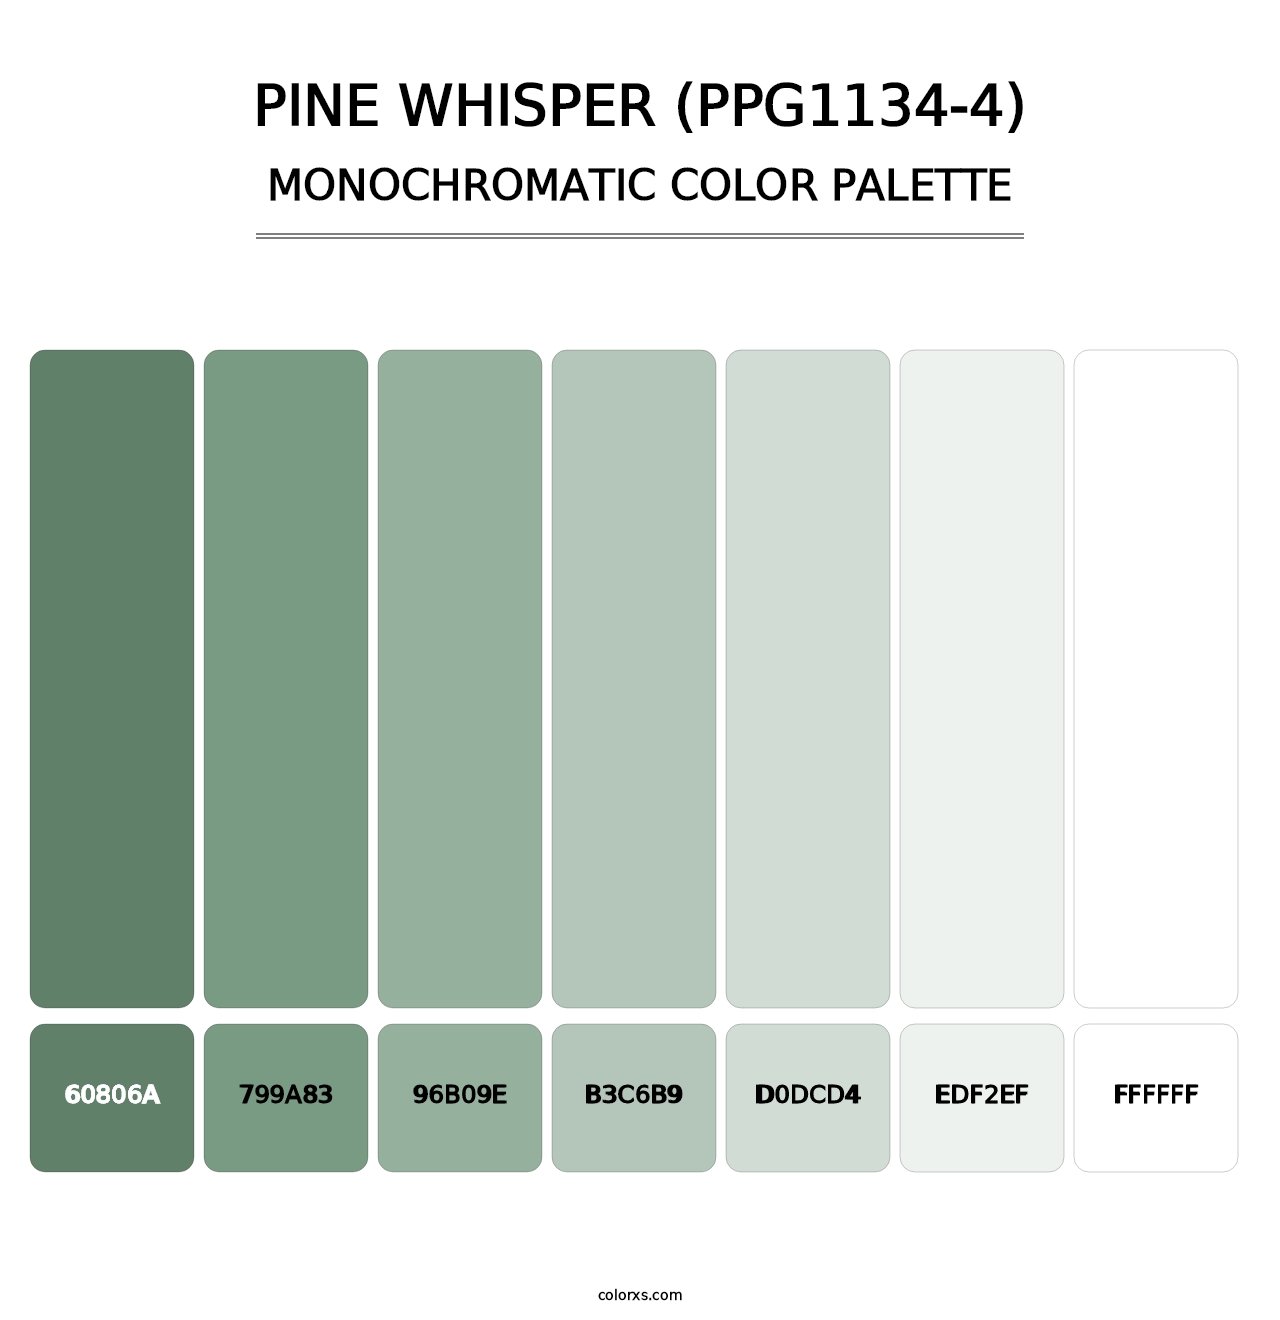 Pine Whisper (PPG1134-4) - Monochromatic Color Palette